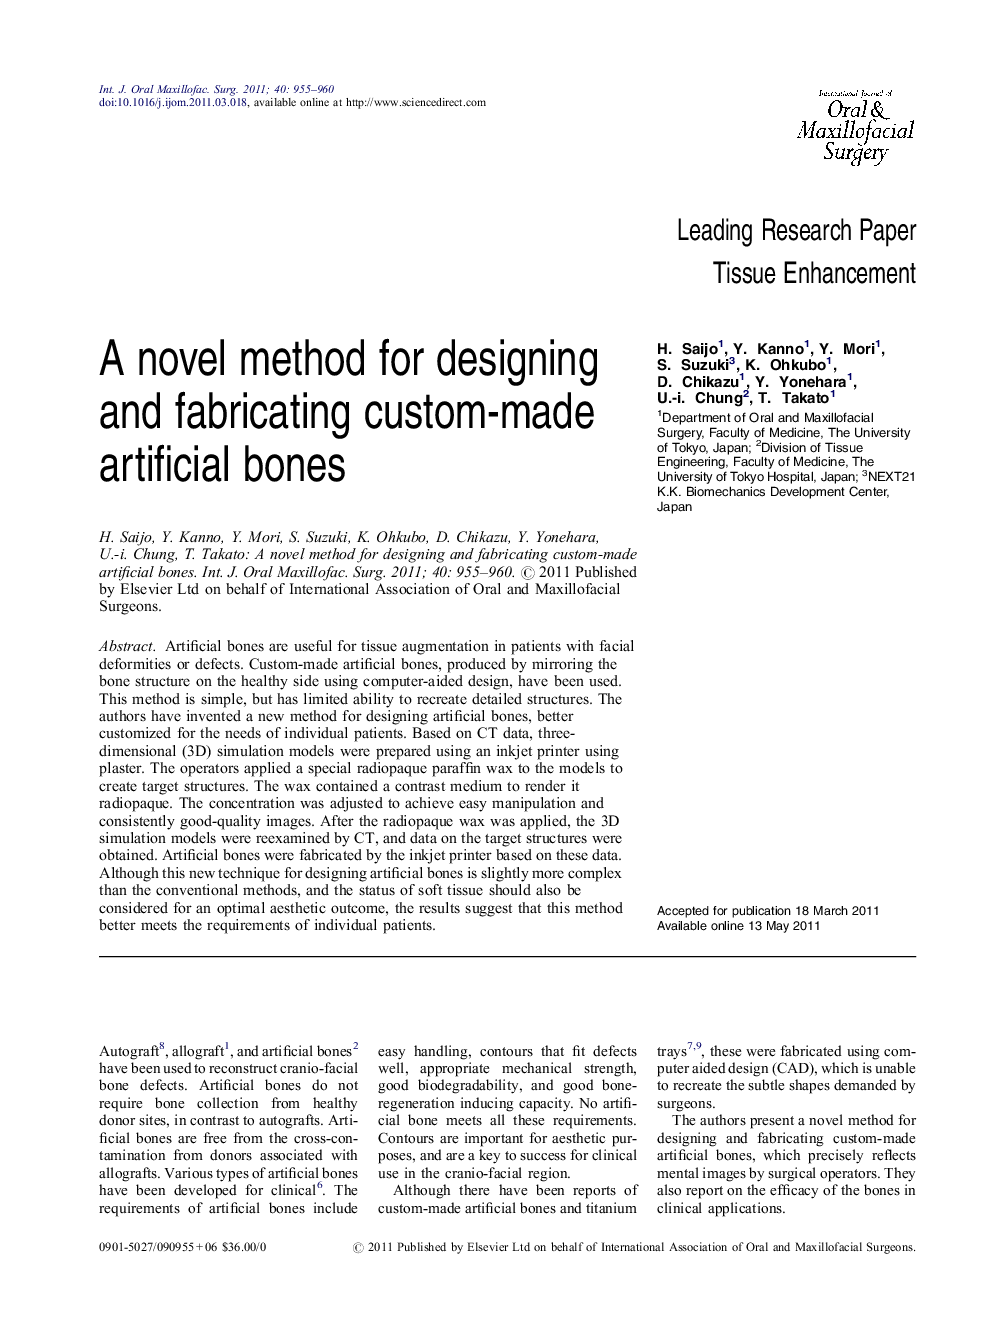 A novel method for designing and fabricating custom-made artificial bones